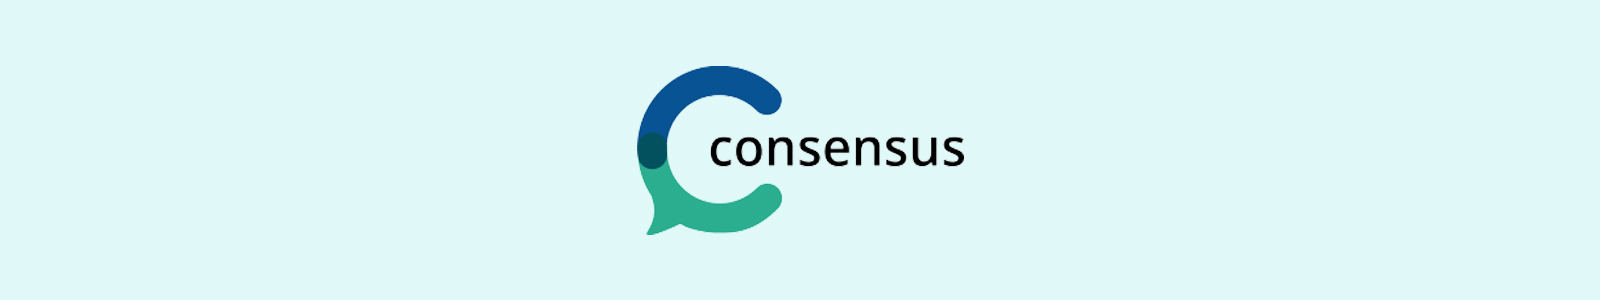 IA Consensus